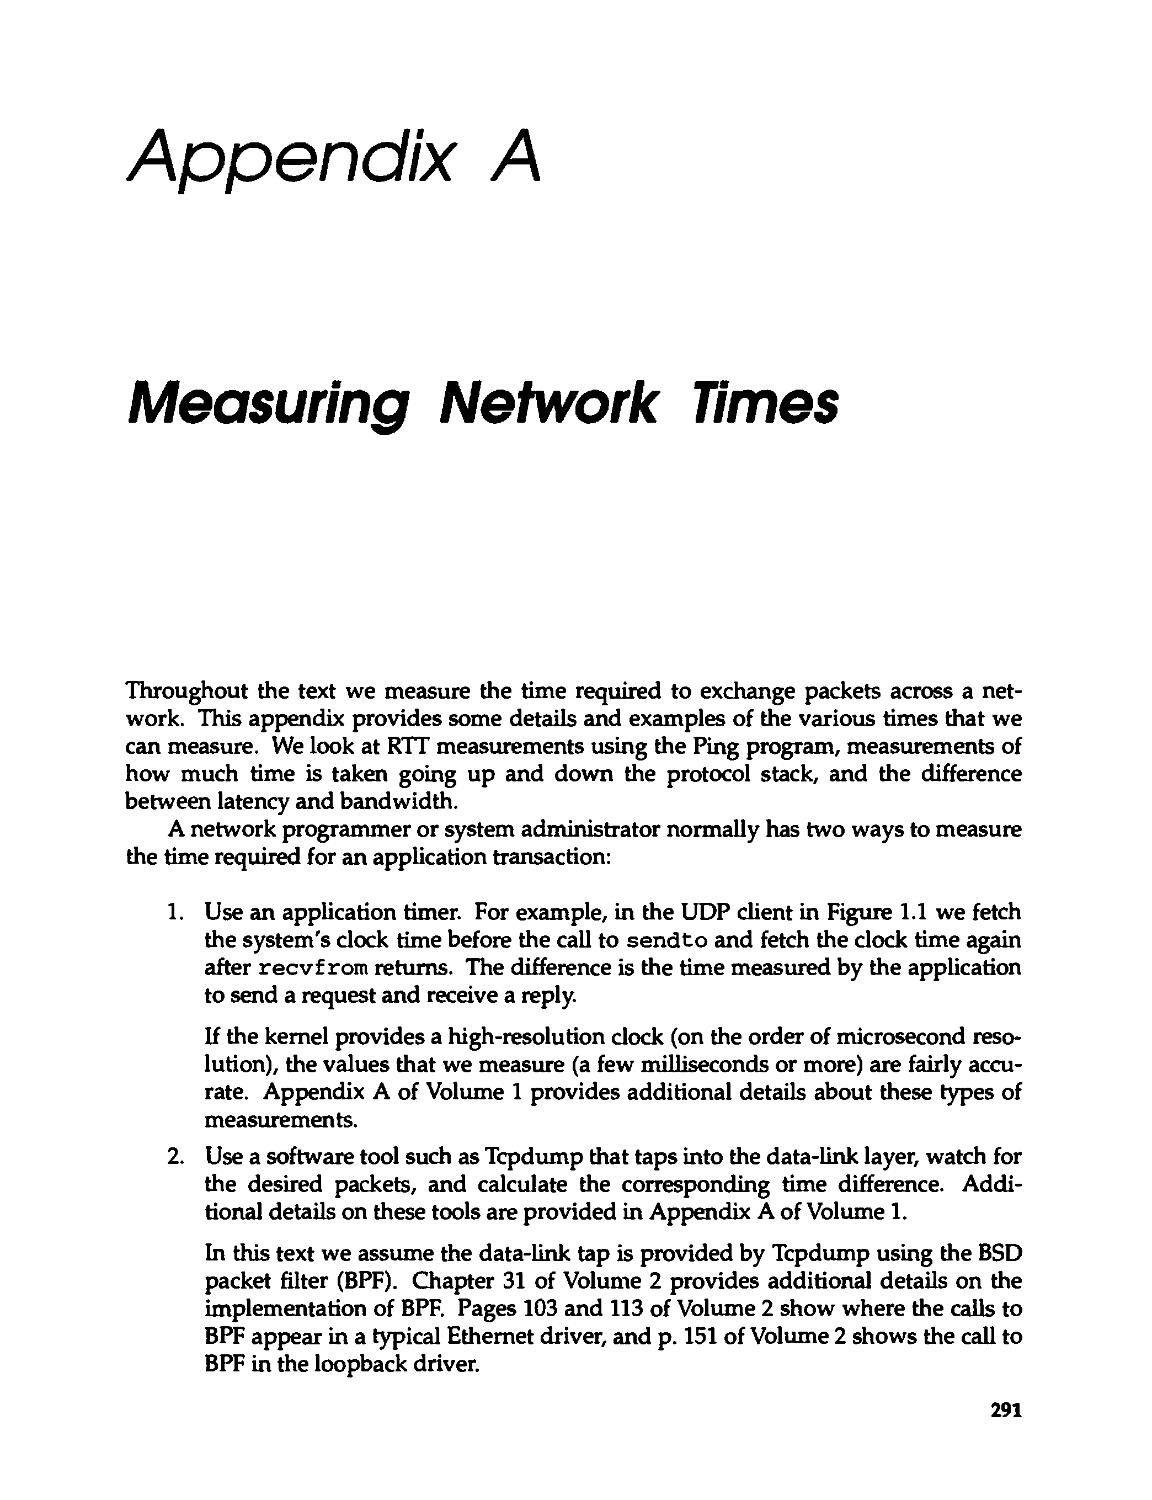 Appendix A. Measuring Network Times